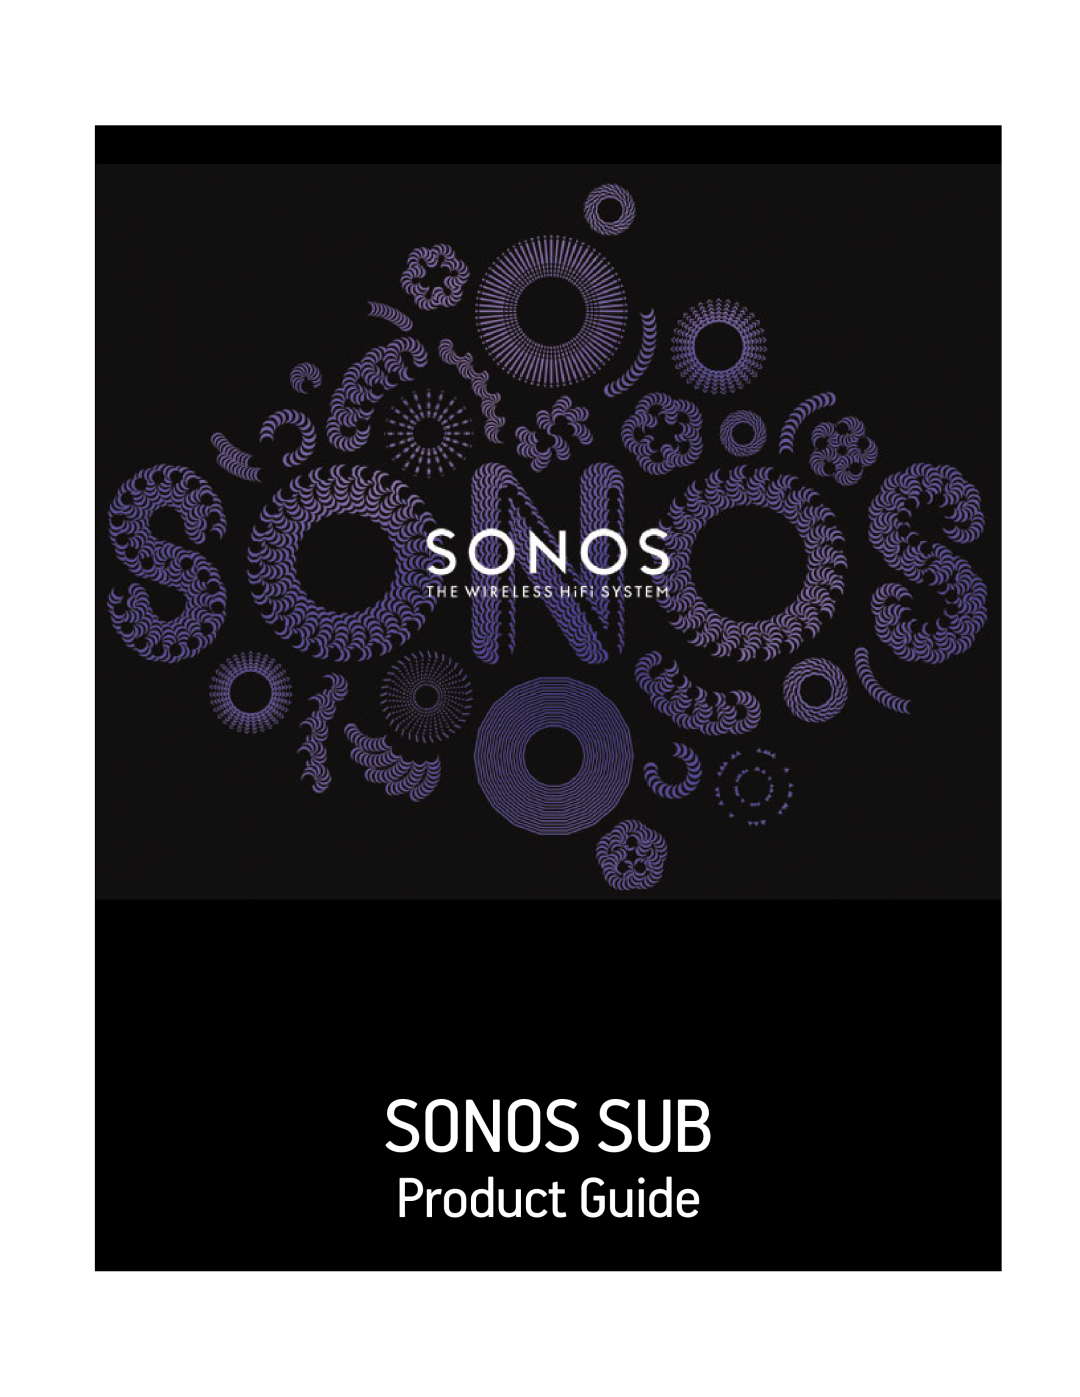 Sonos Q2 manual Sonos Sub, Product Guide 